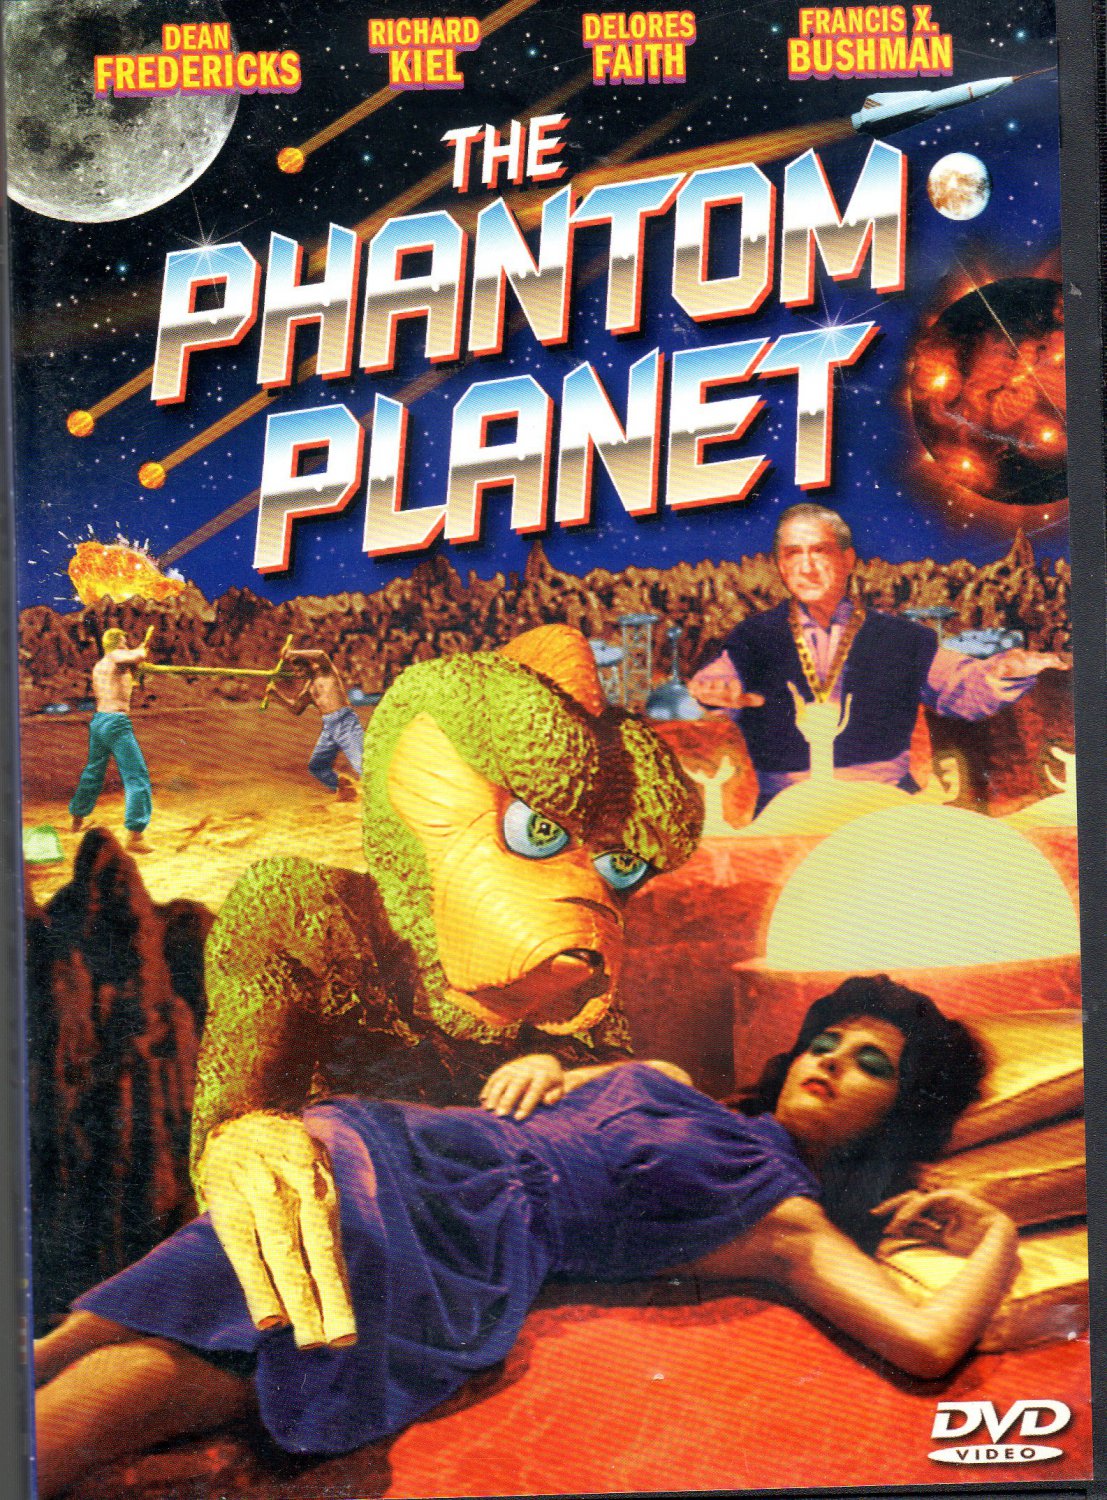 The Phantom Planet (DVD, 2002) Coleen Gray, Richard Kiel, Delores Faith1107 x 1500